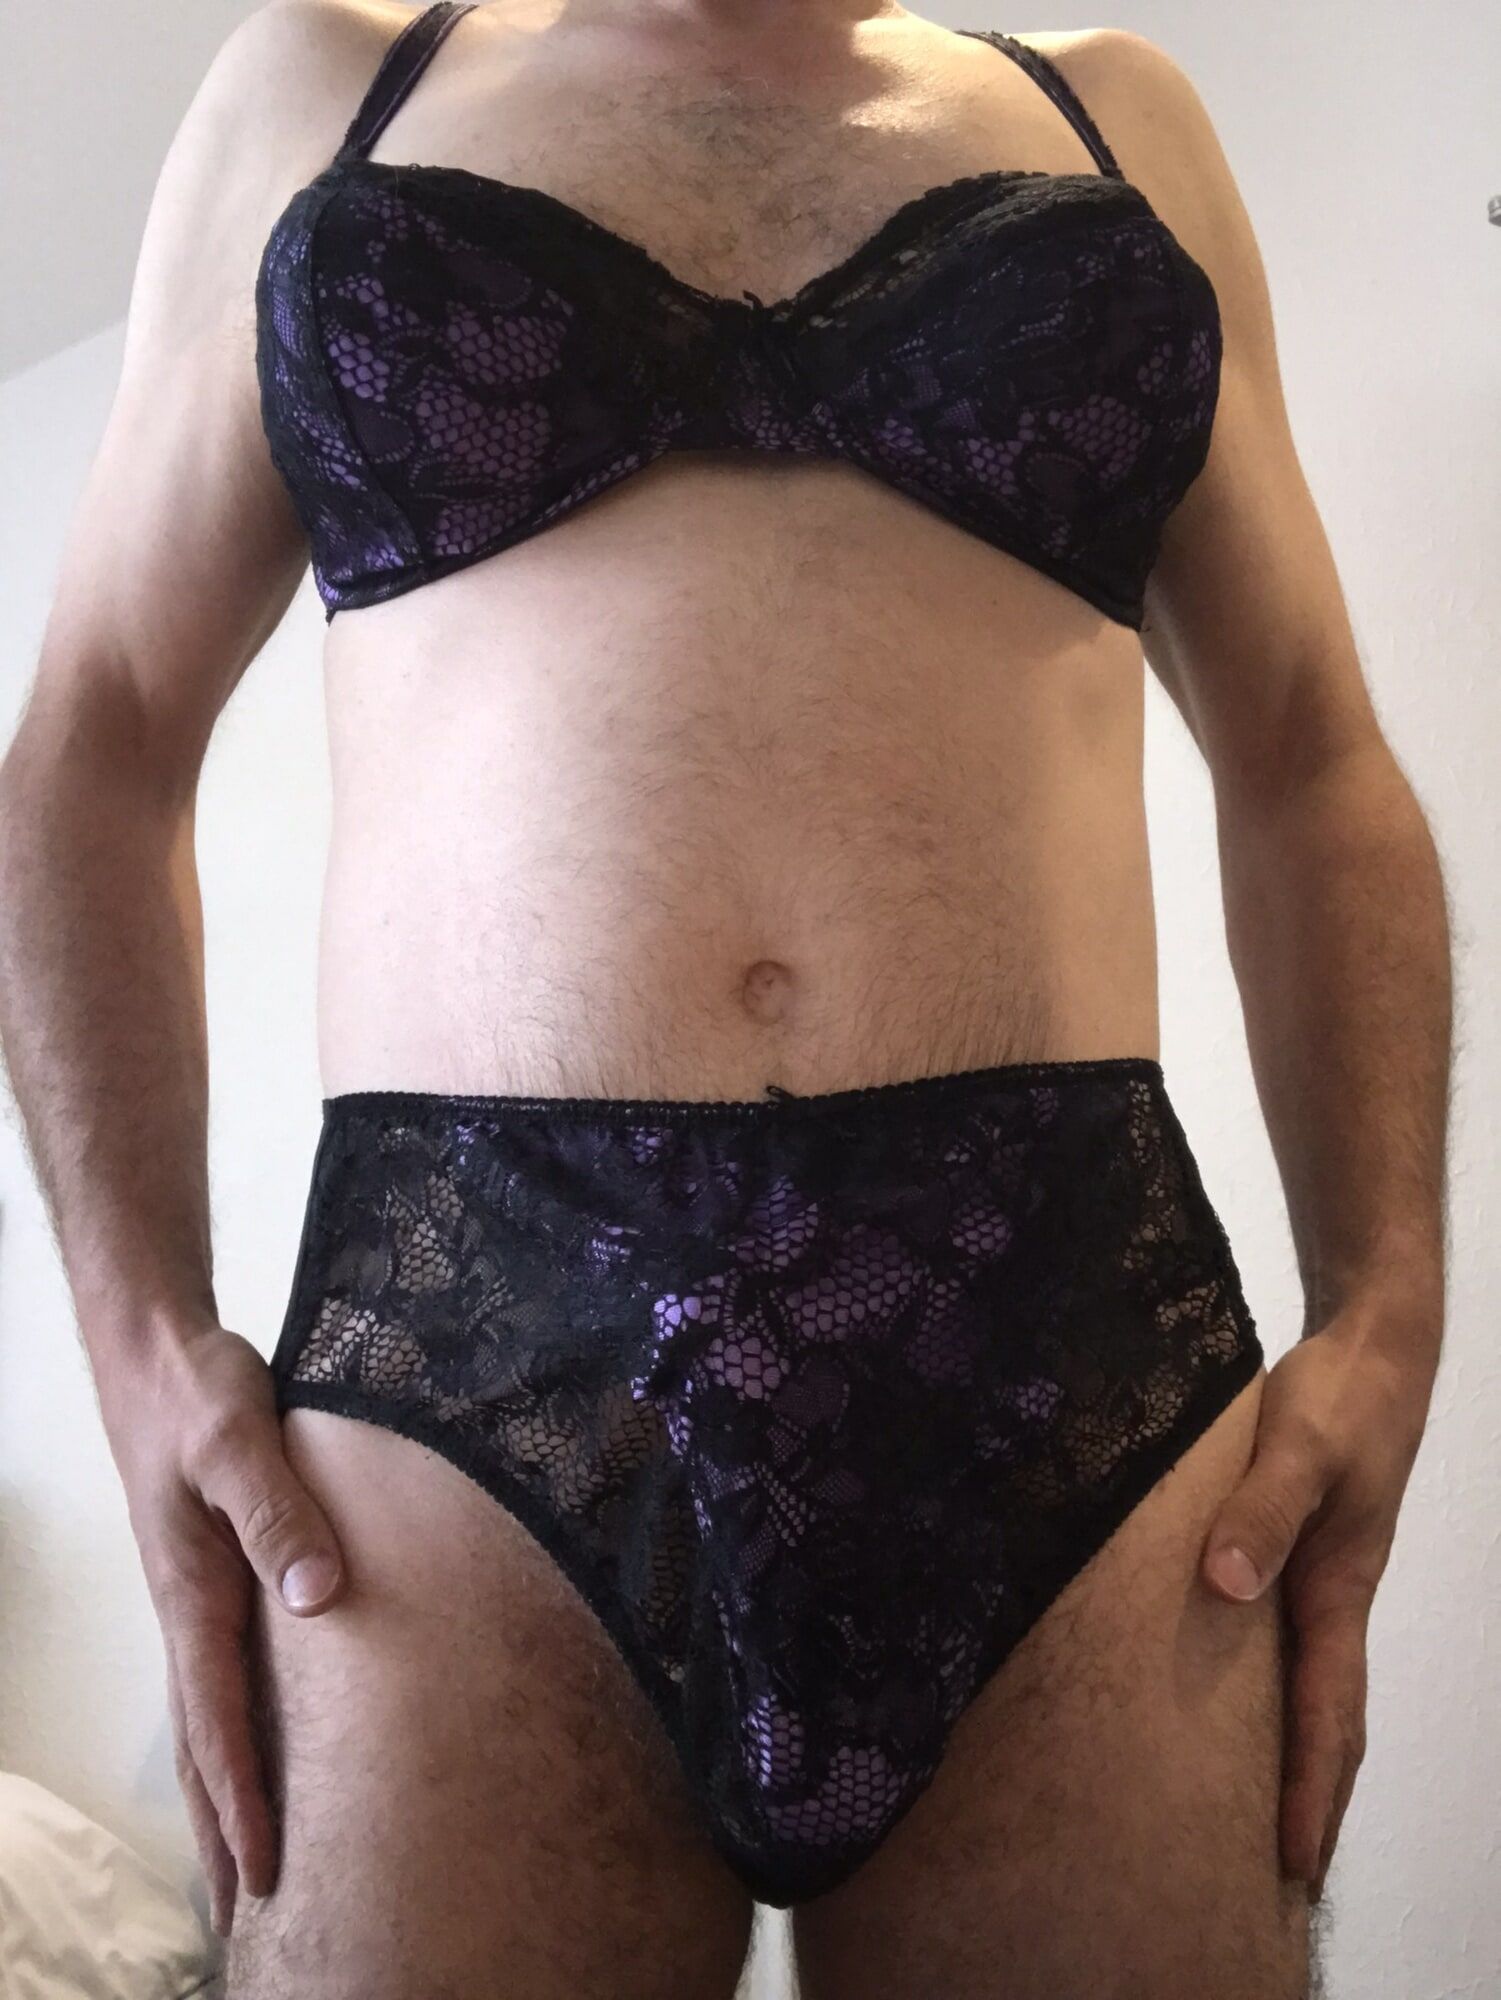 Dressing up in my wife's purple bra set